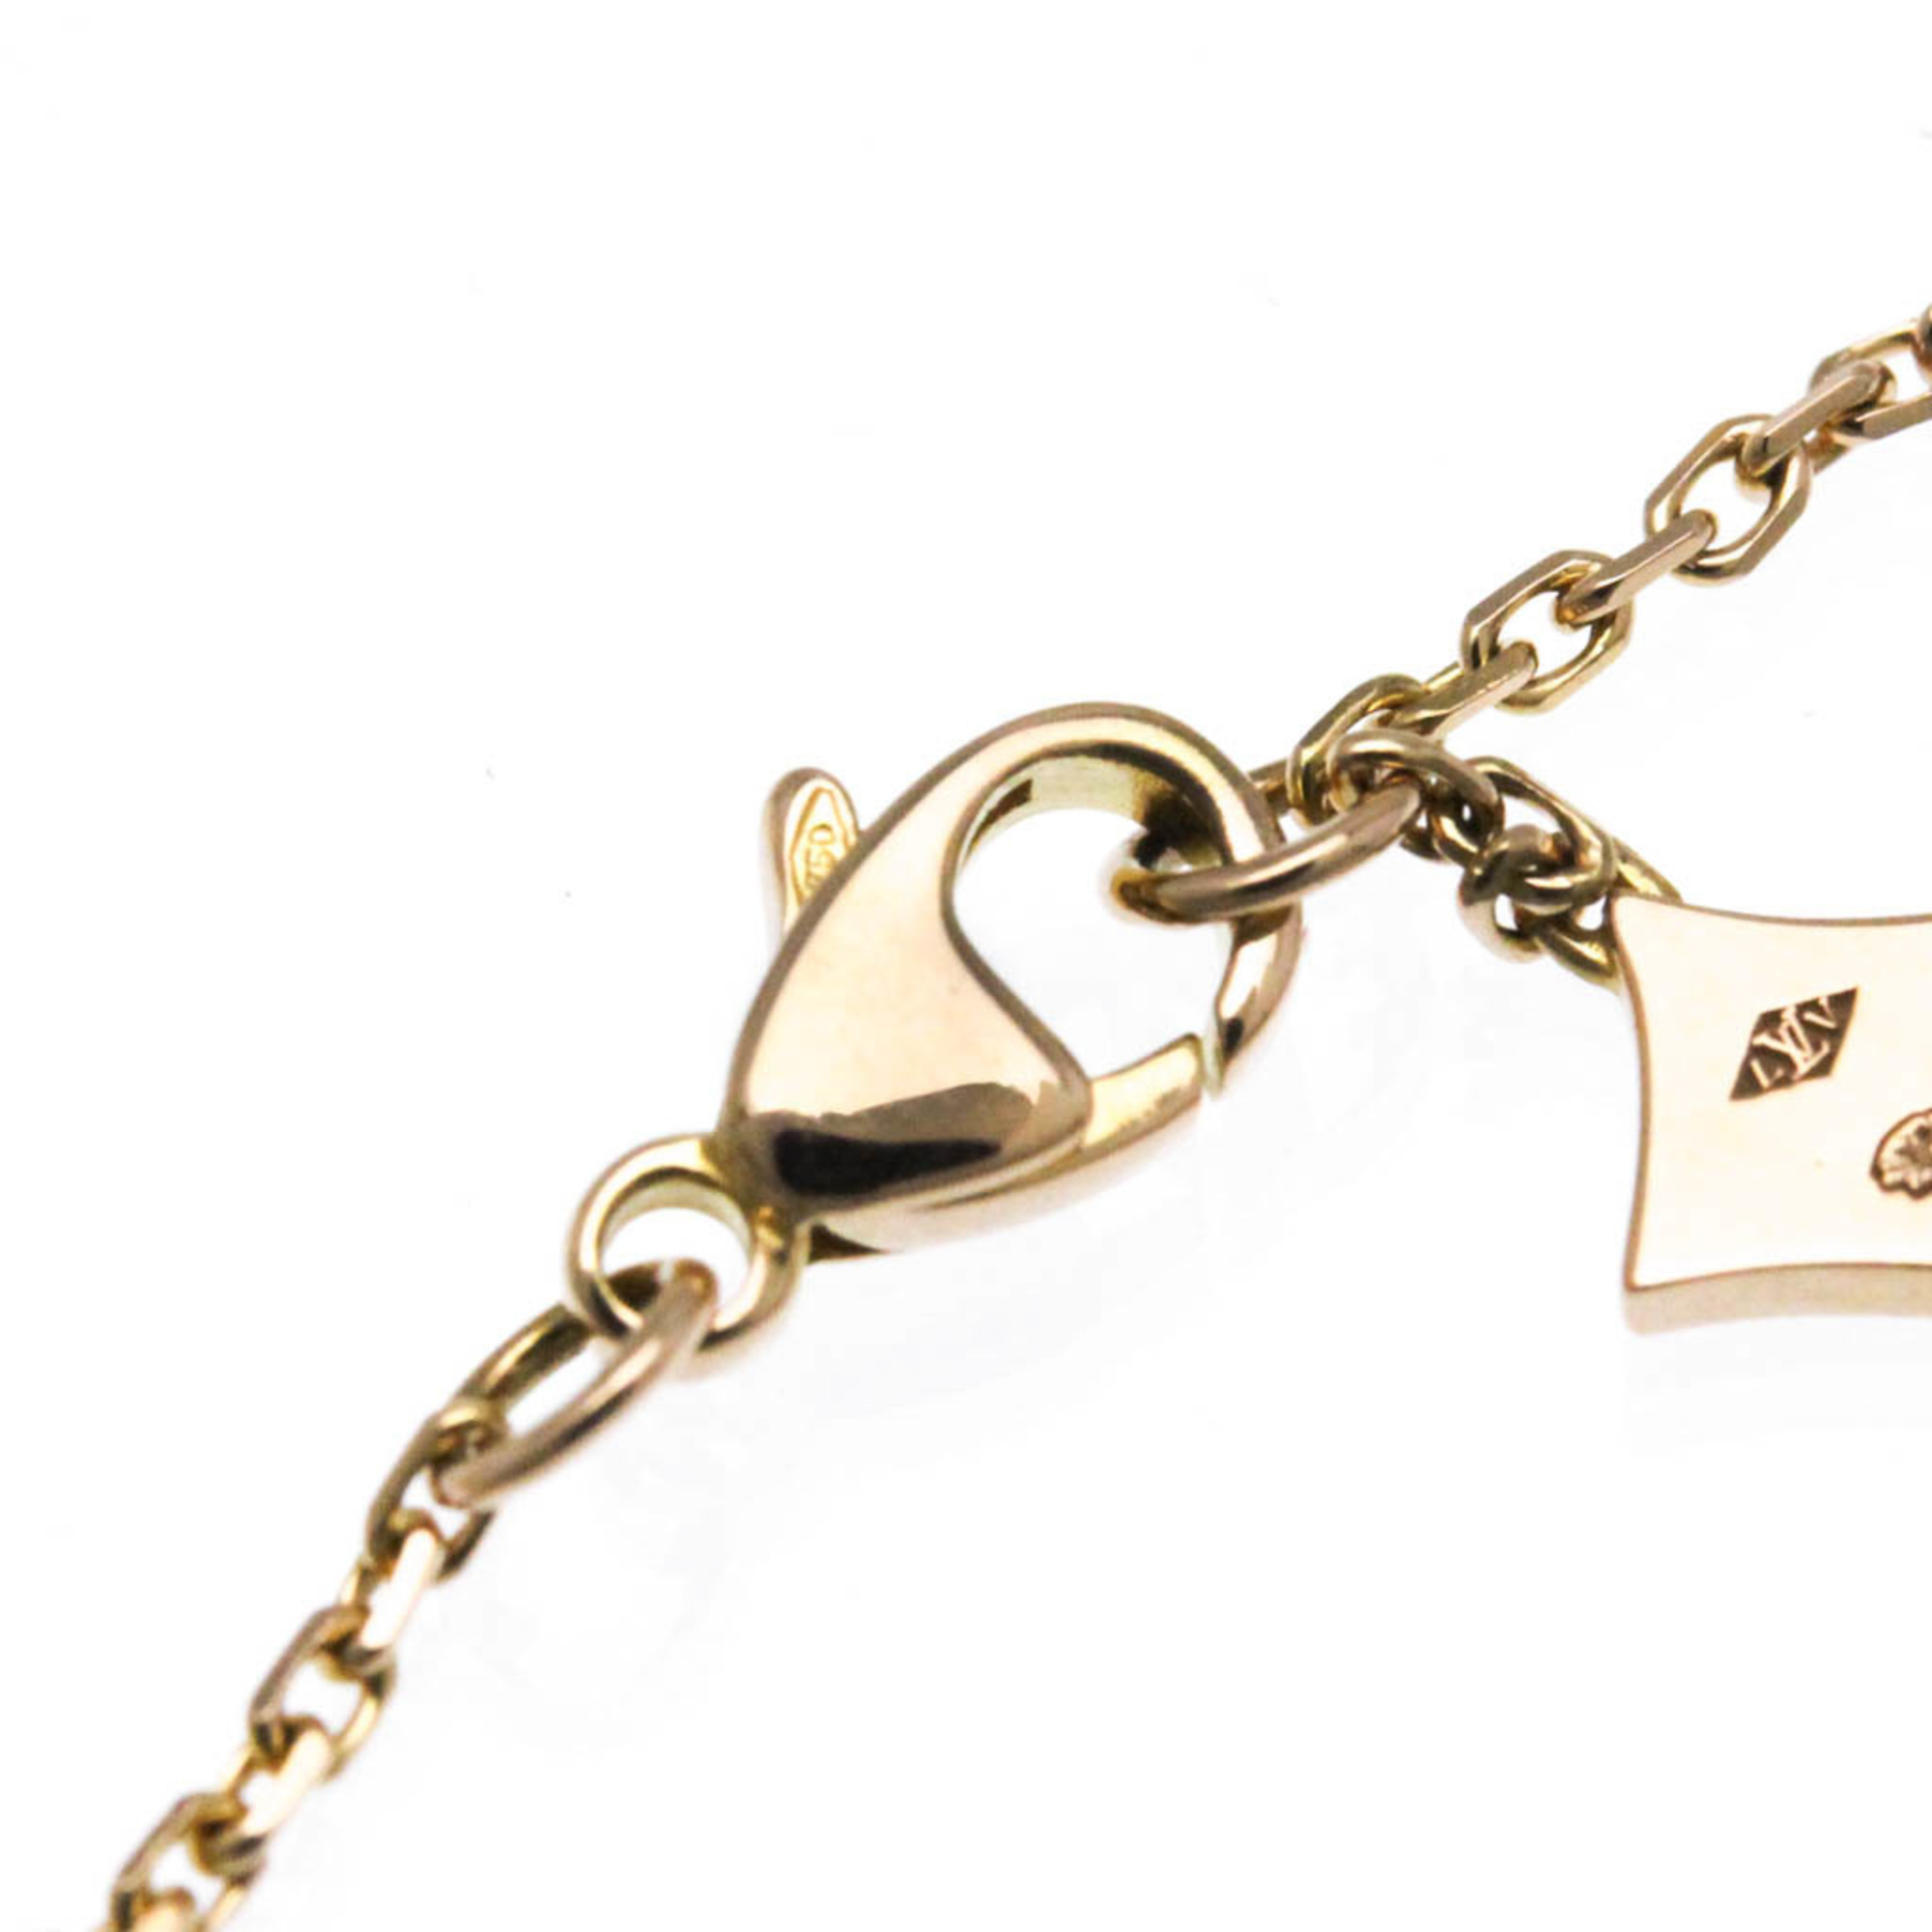 Louis Vuitton Pendant Star Blossom Pink Gold X Diamond Q93710 Pink Gold (18K) Diamond Men,Women Fashion Pendant Necklace (Pink Gold)